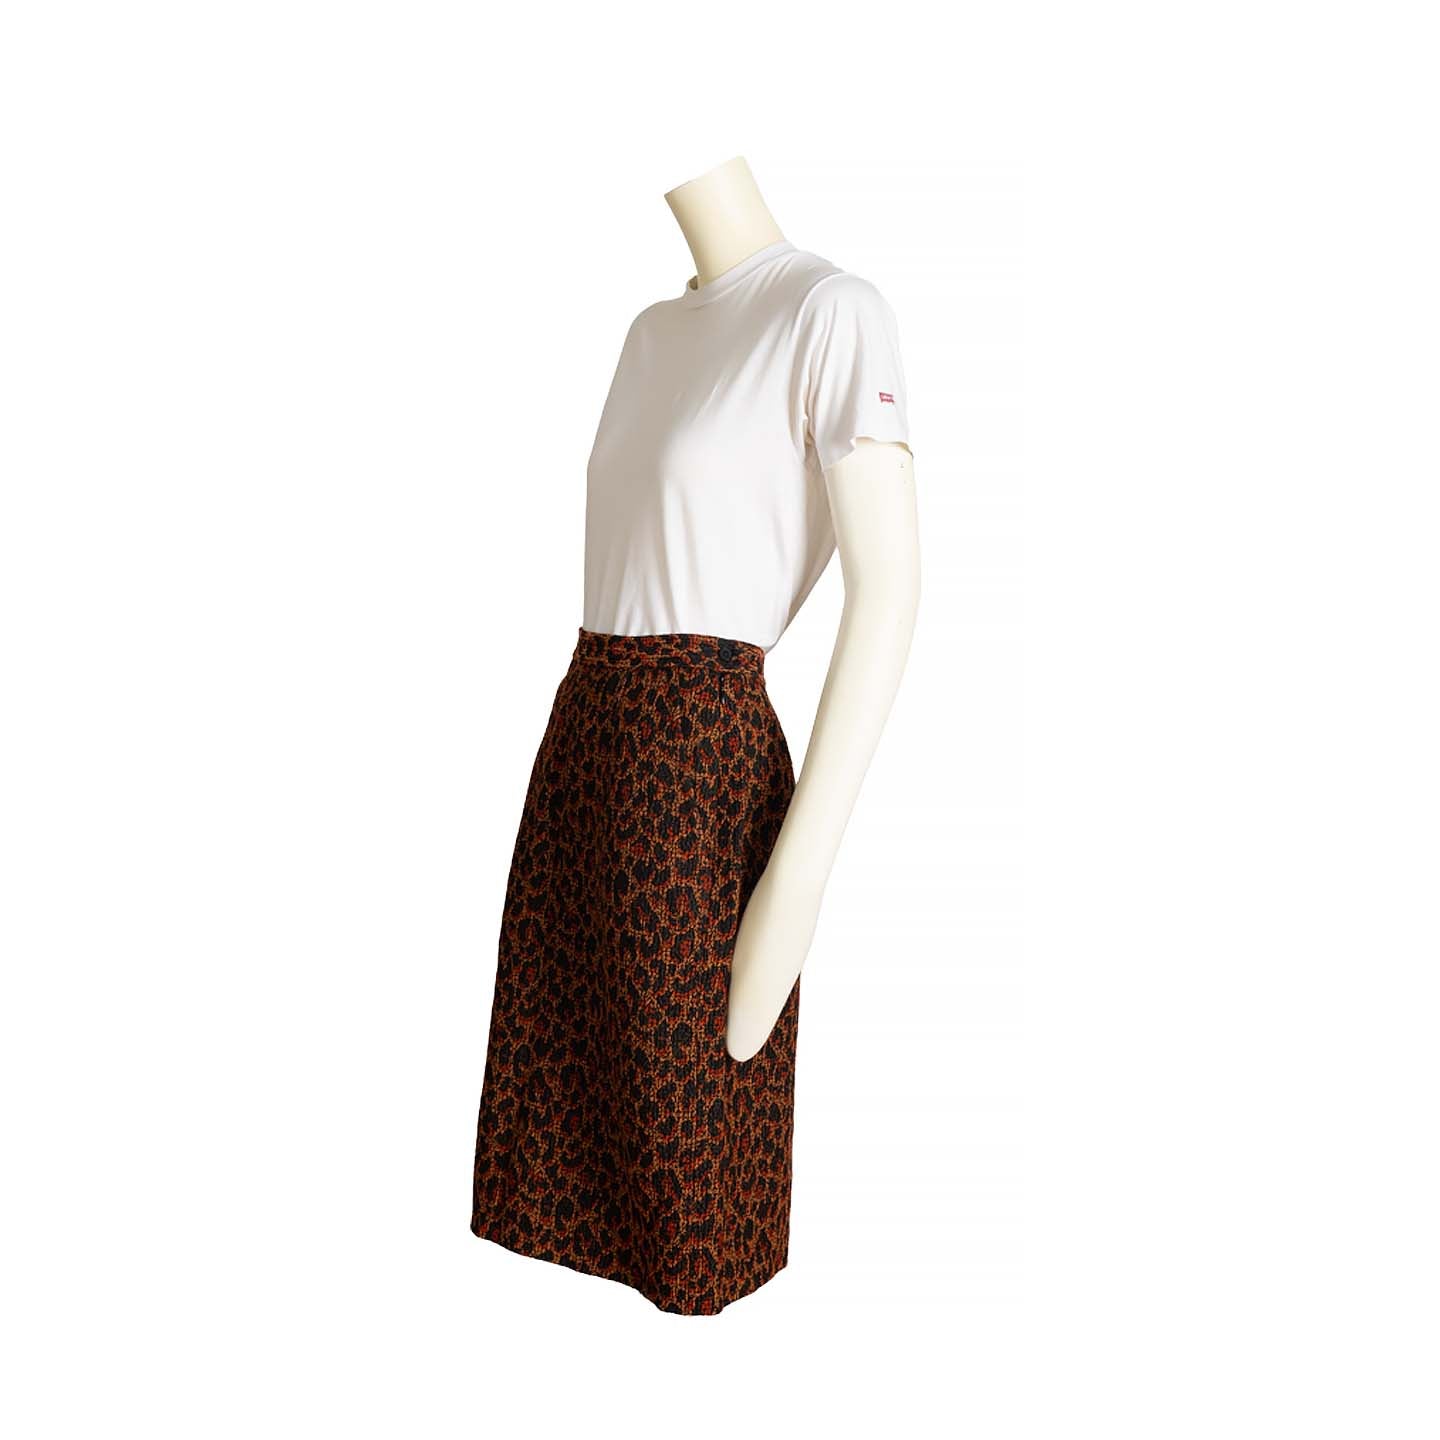 Yves Saint Laurent Rive Gauche leopard skirt - M - 1980s